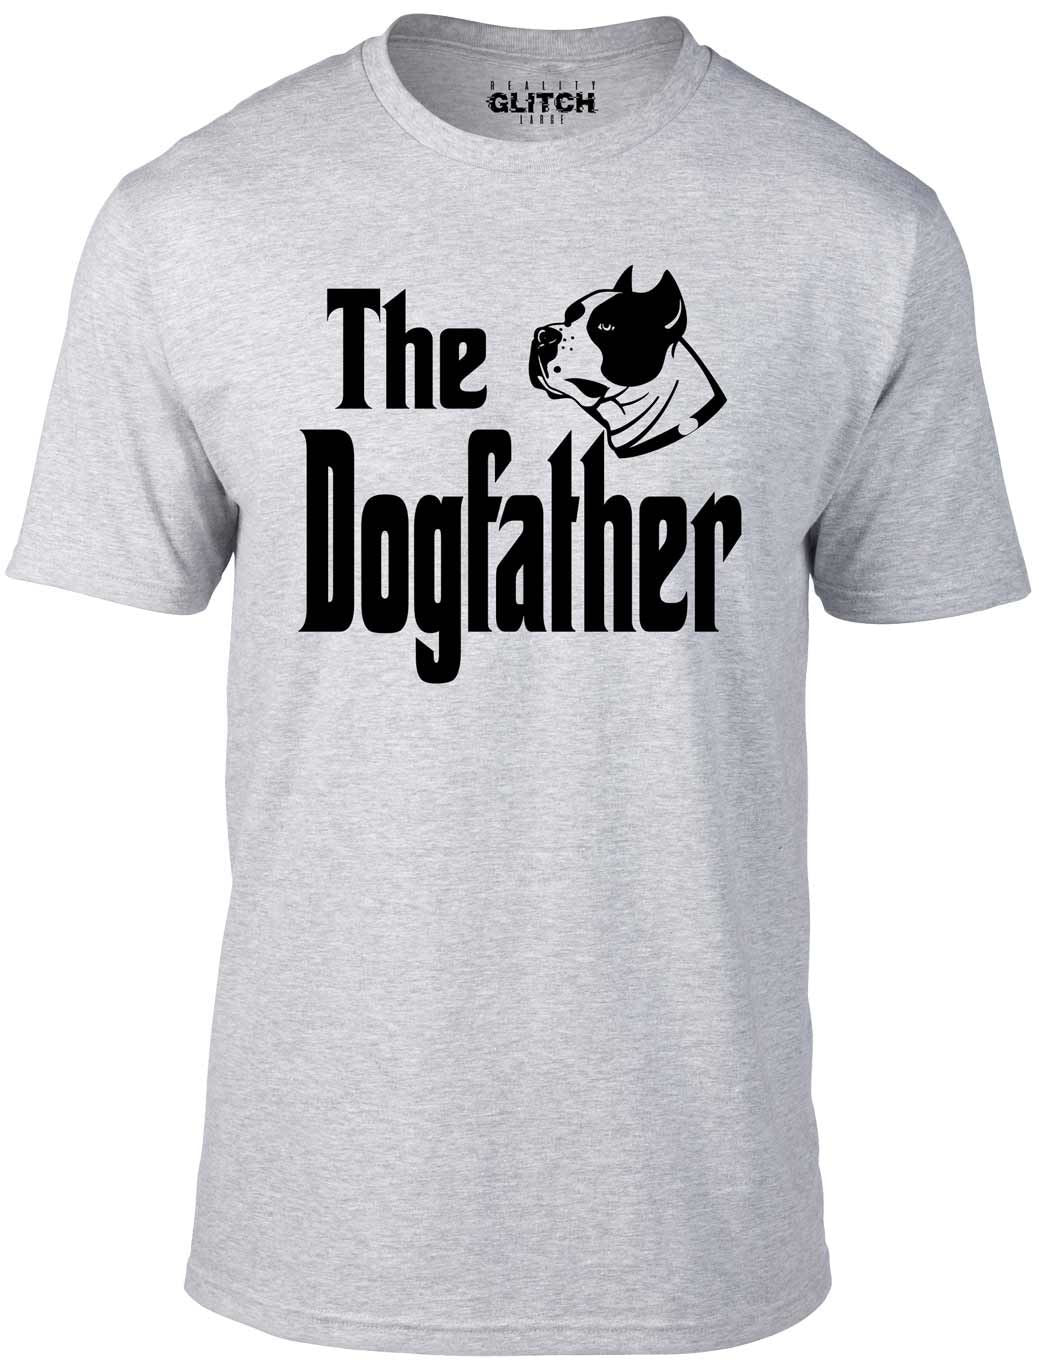 Men's Grey T-shirt With a snoop dog Printed Design